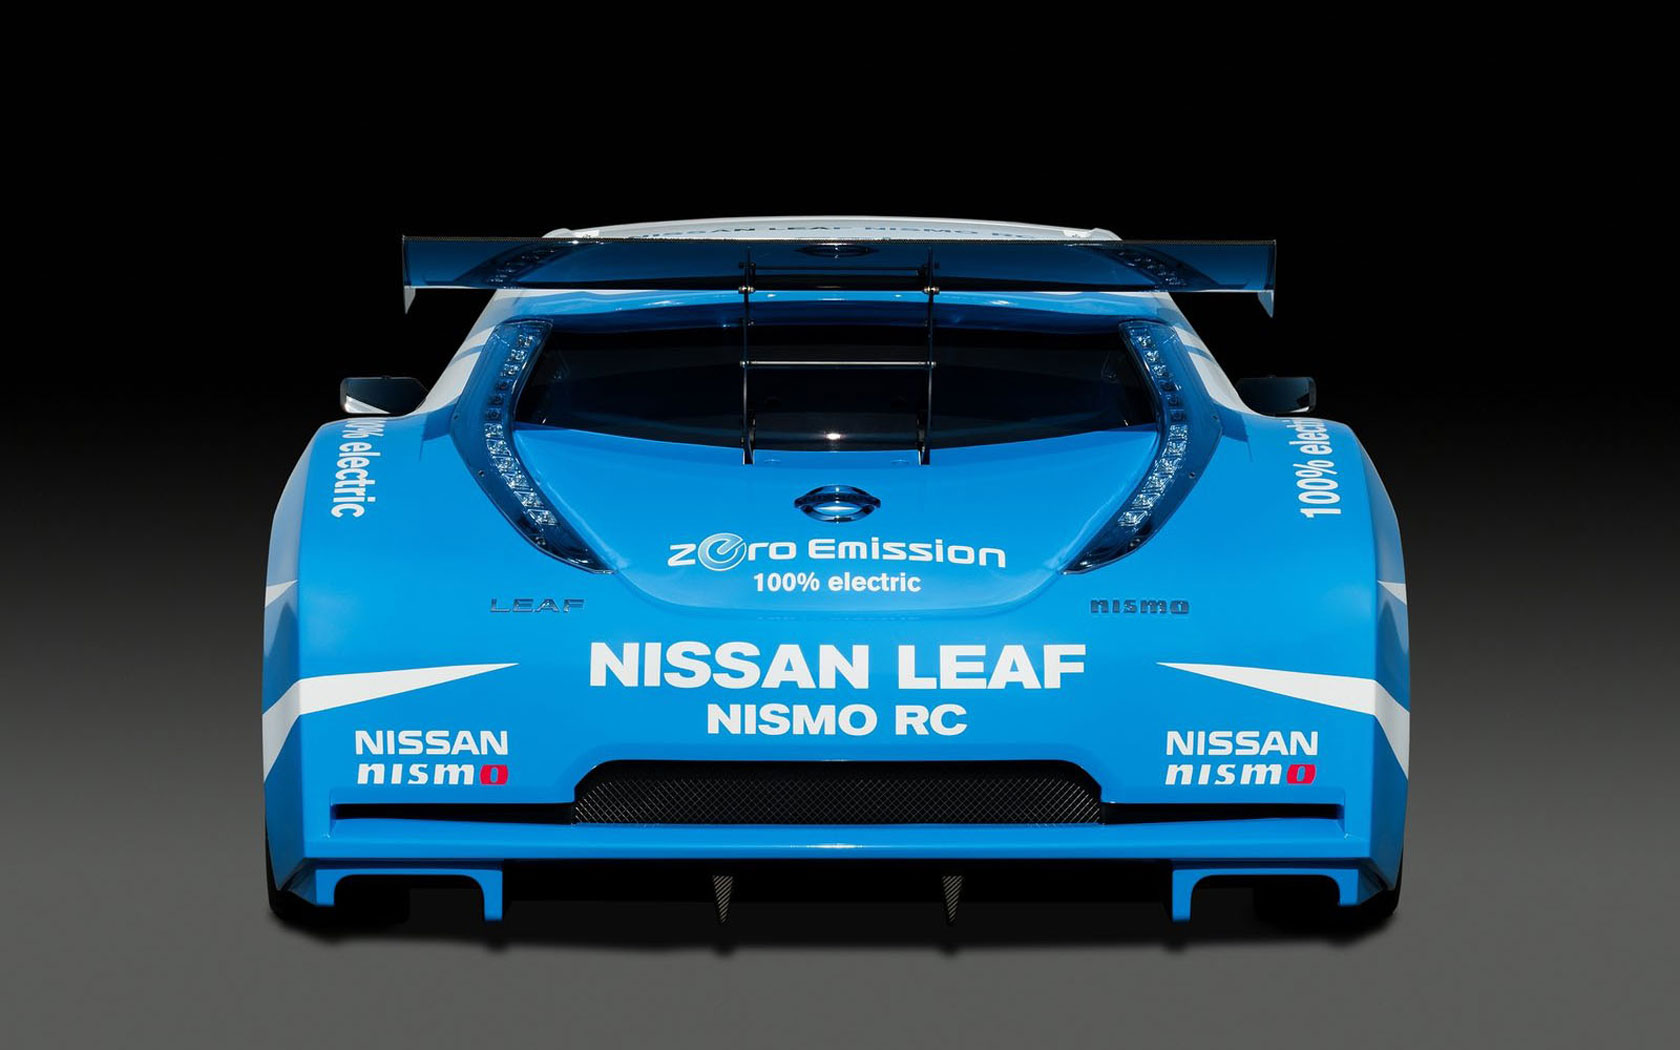  Nissan Leaf Nismo RC Concept 